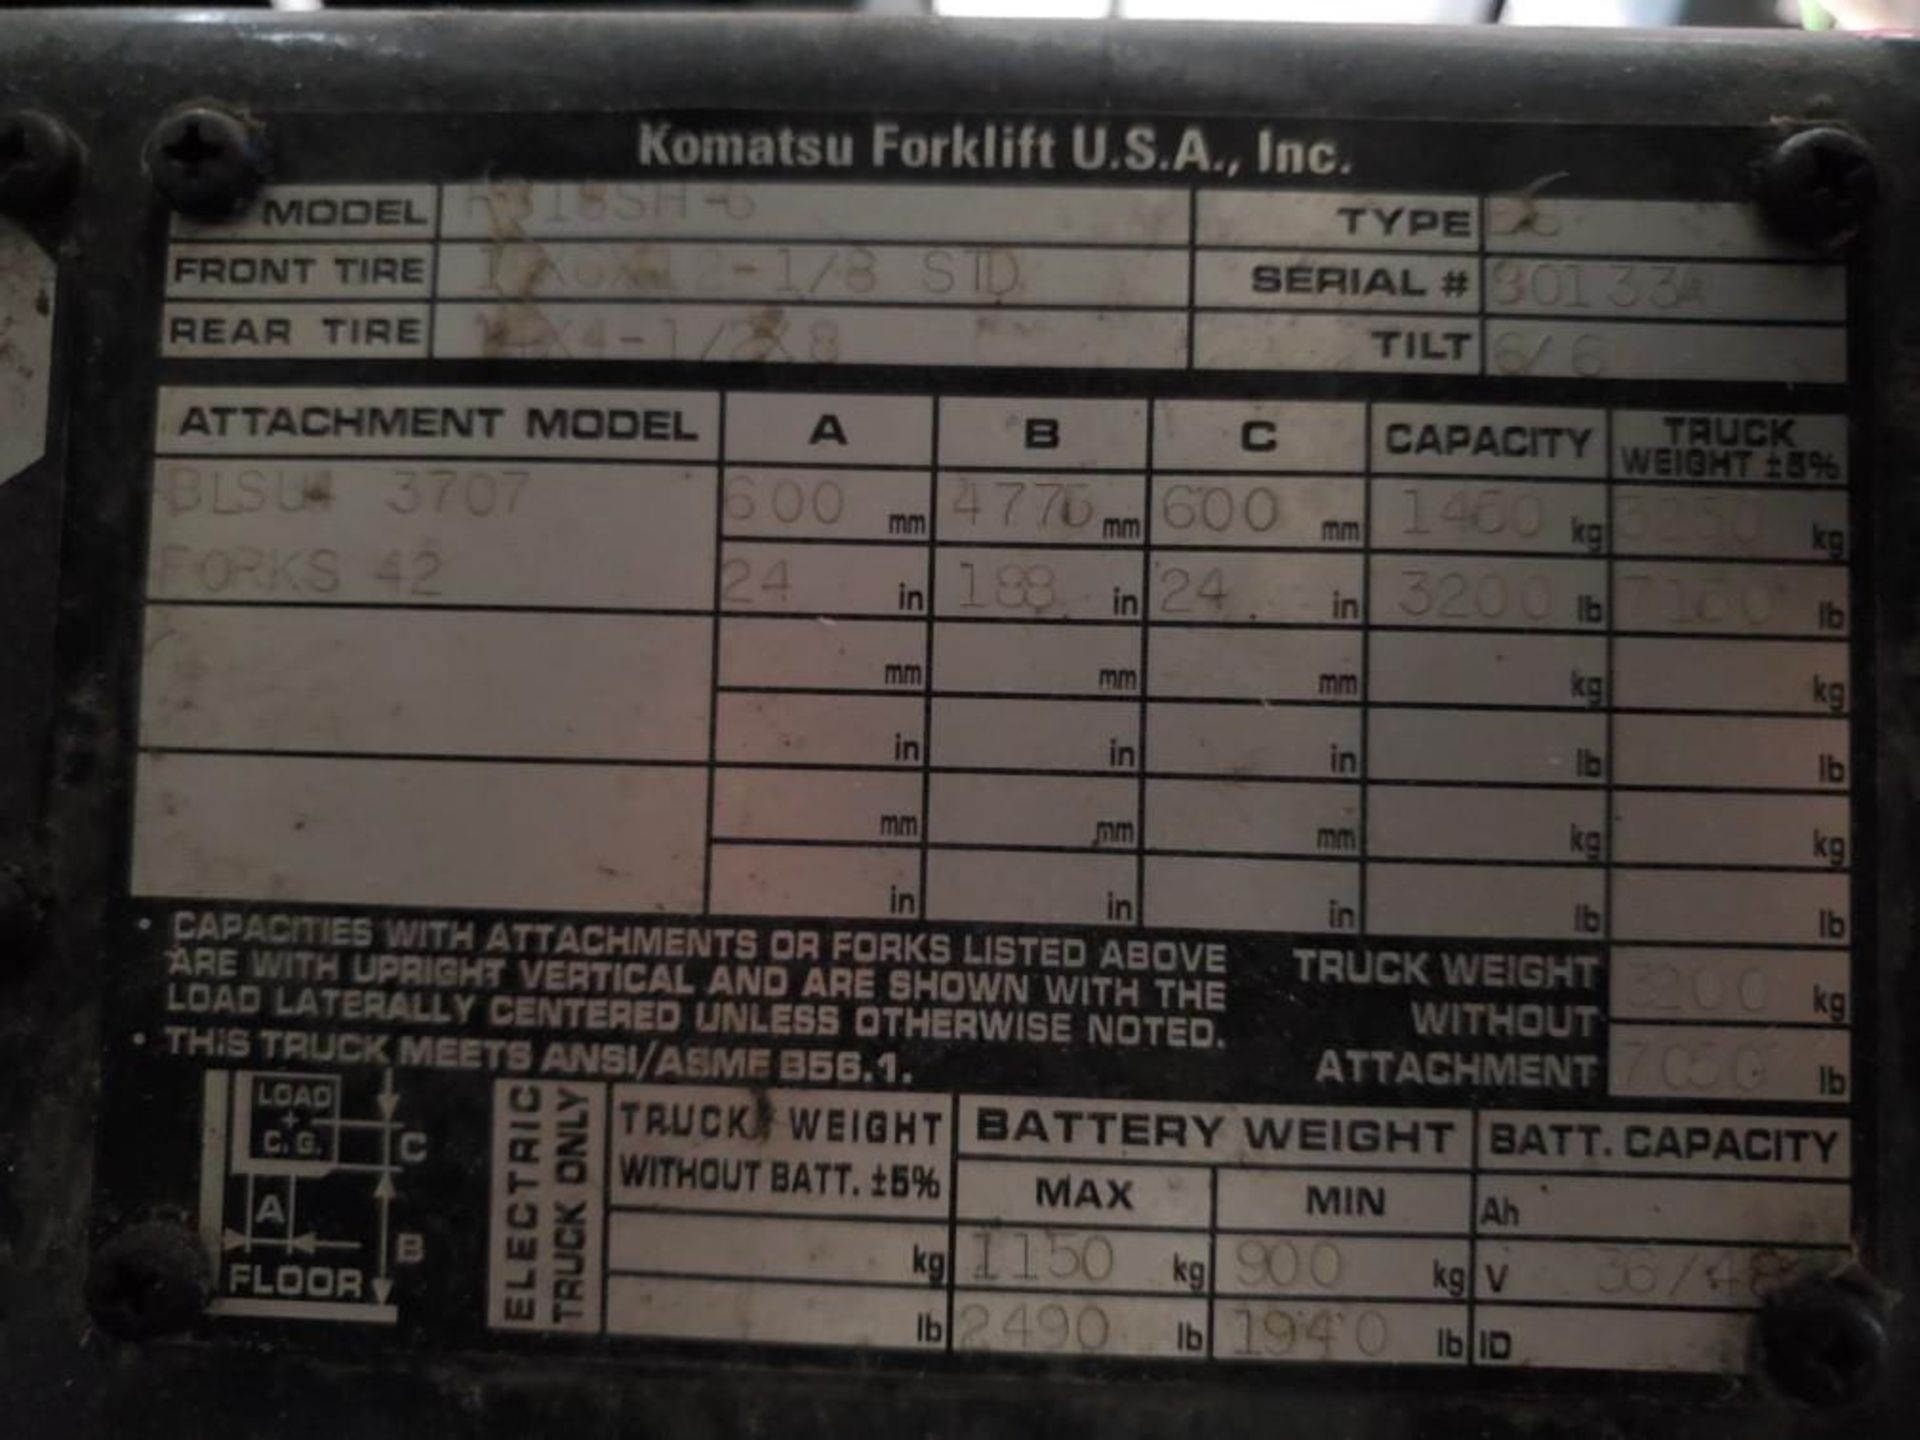 KOMATSU 3,200 LB CAPACITY ELECTRIC FORKLIFT TRUCK - Image 7 of 10